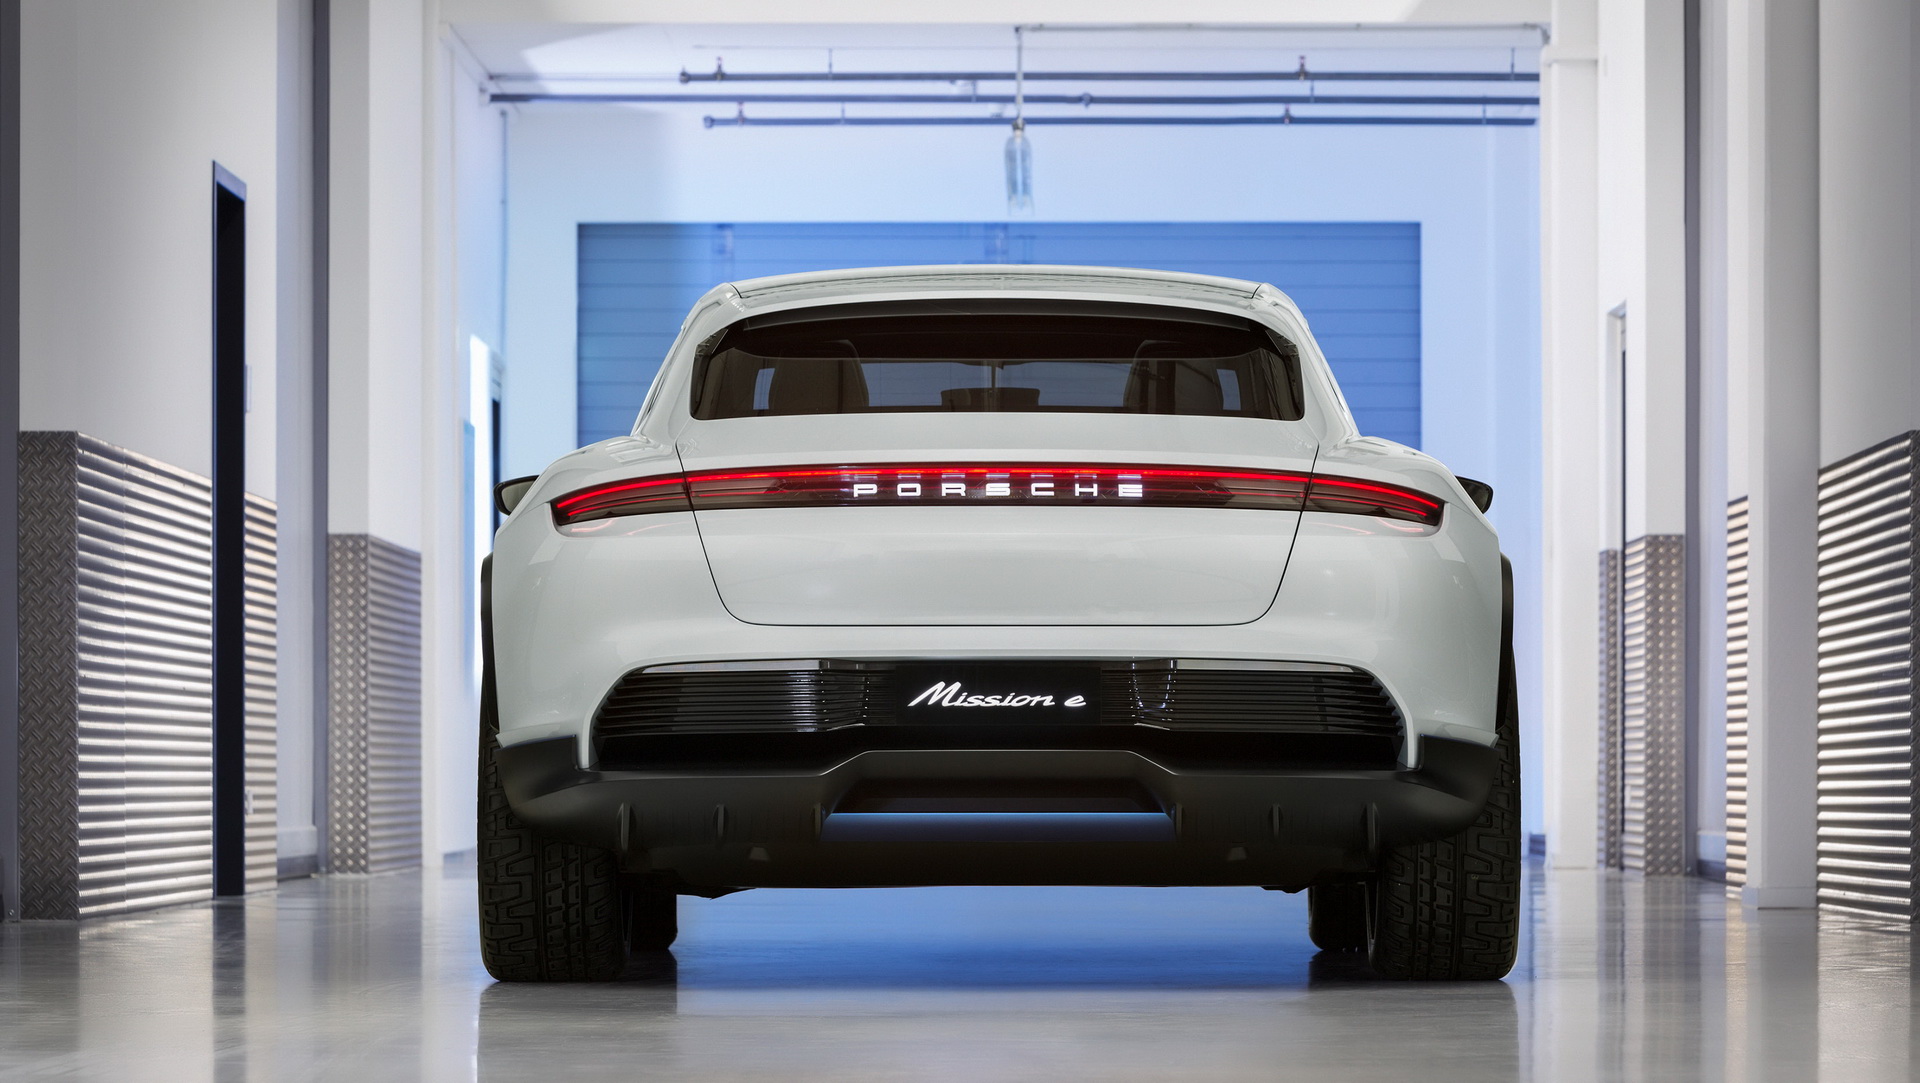 Geneva International Motor Show, porsche-mission-e-cross-turismo-geneva-4: Porsche Mission E Cross Turismo : Panamera Listrik Jangkung Dikit